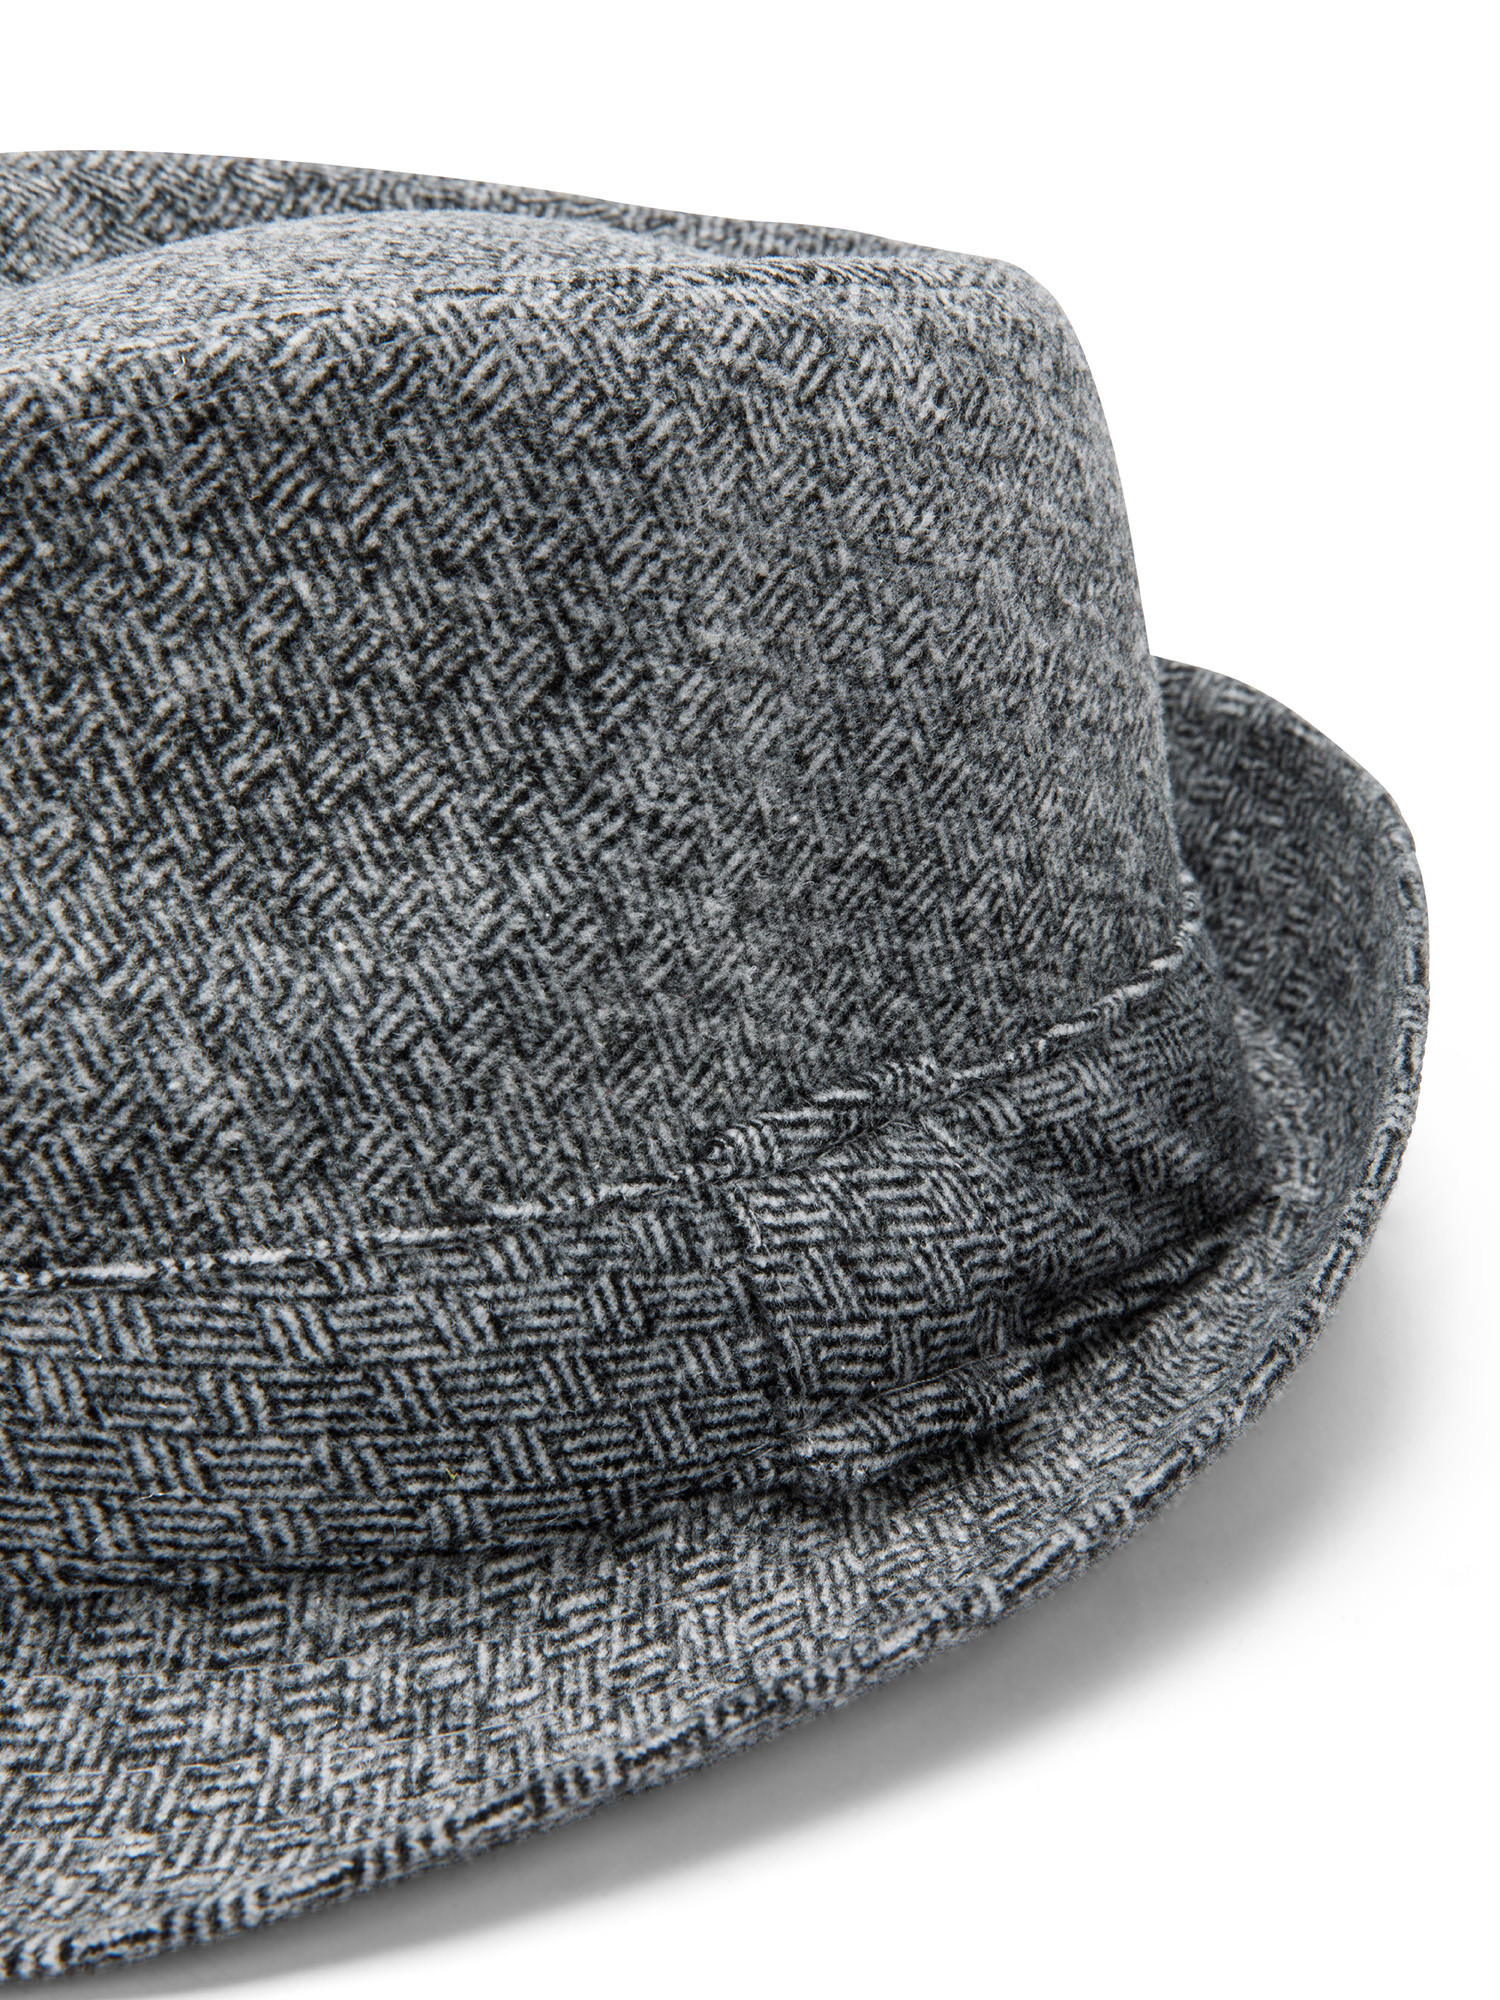 Luca D'Altieri - Barbed alpine hat, White, large image number 1